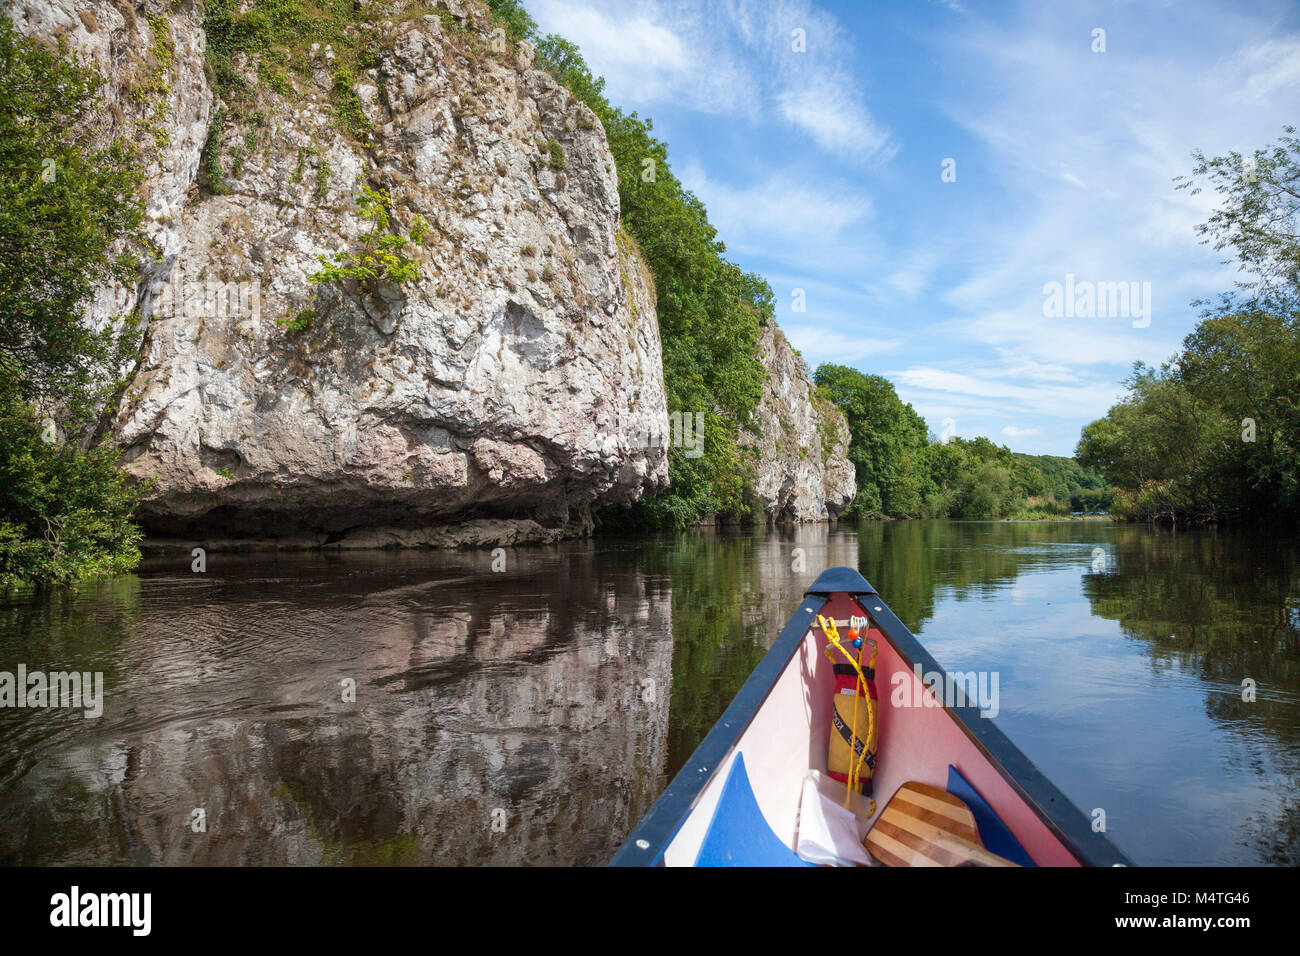 Canoeing beside limestone cliffs on the Blackwater River, Mallow, County Cork, Ireland. Stock Photo